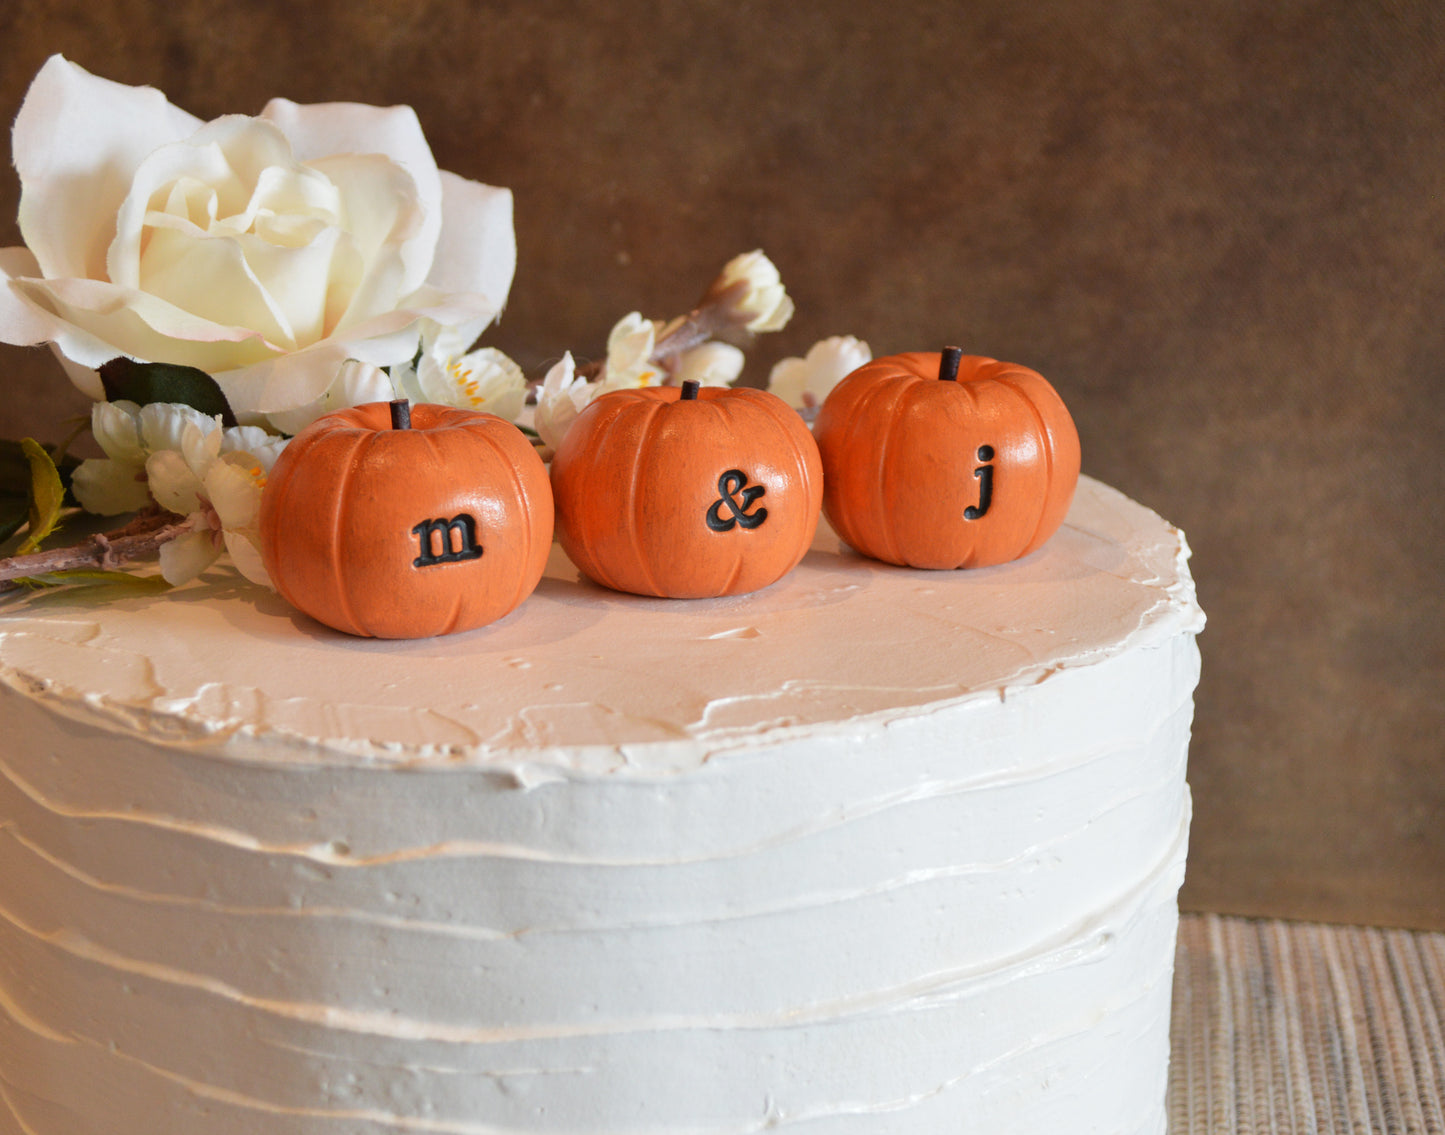 Custom personalized initials wedding cake topper orange pumpkins / FREE SHIPPING